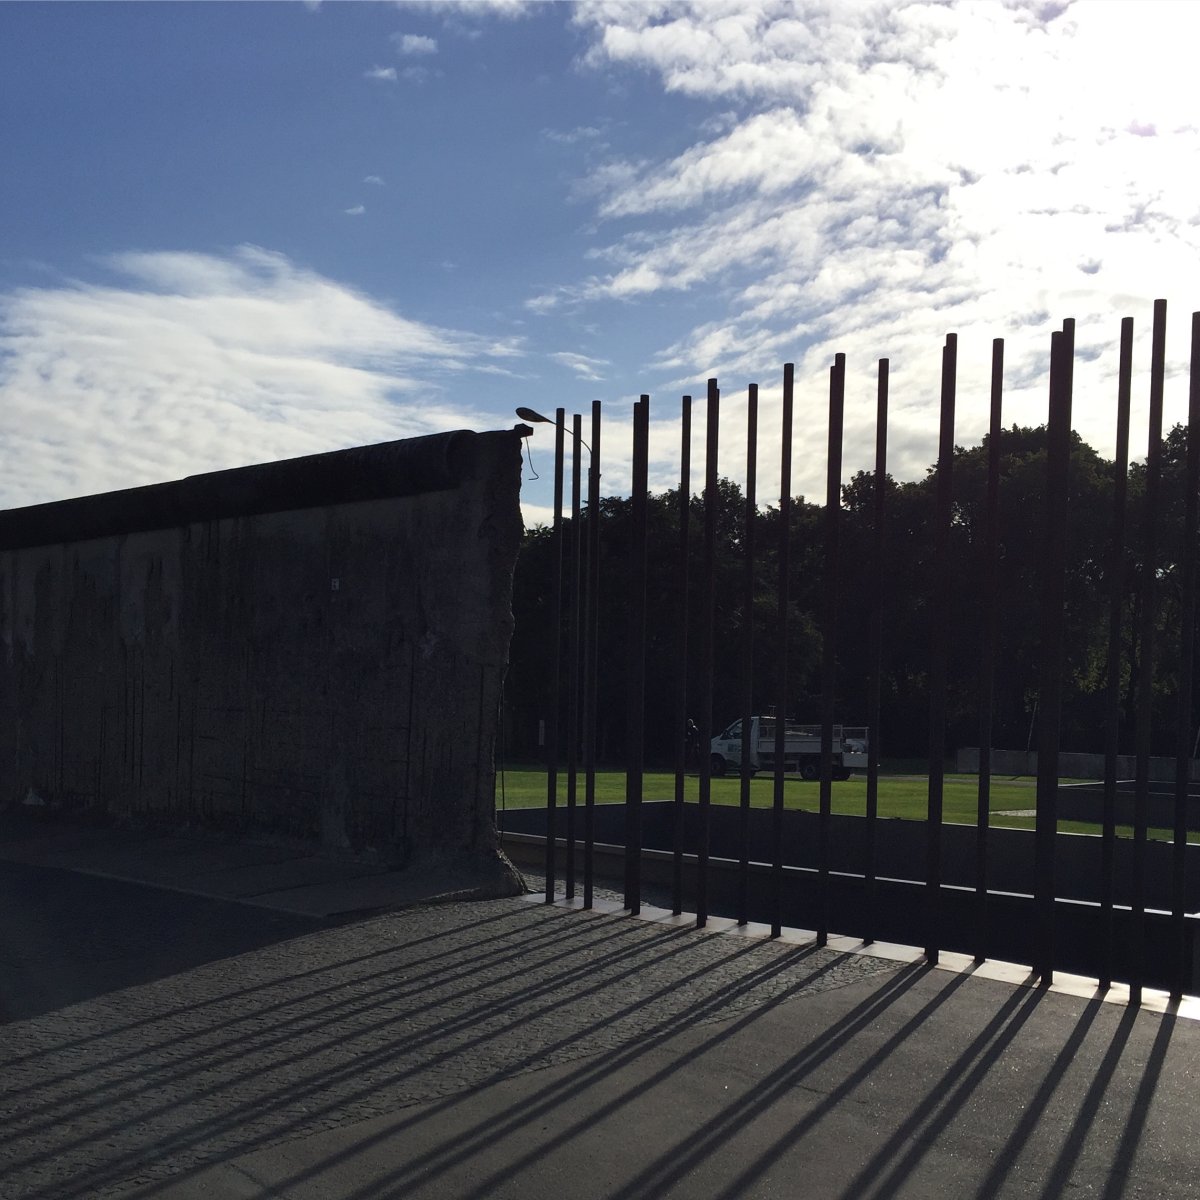 The memorial to the Berlin Wall in Berlin.